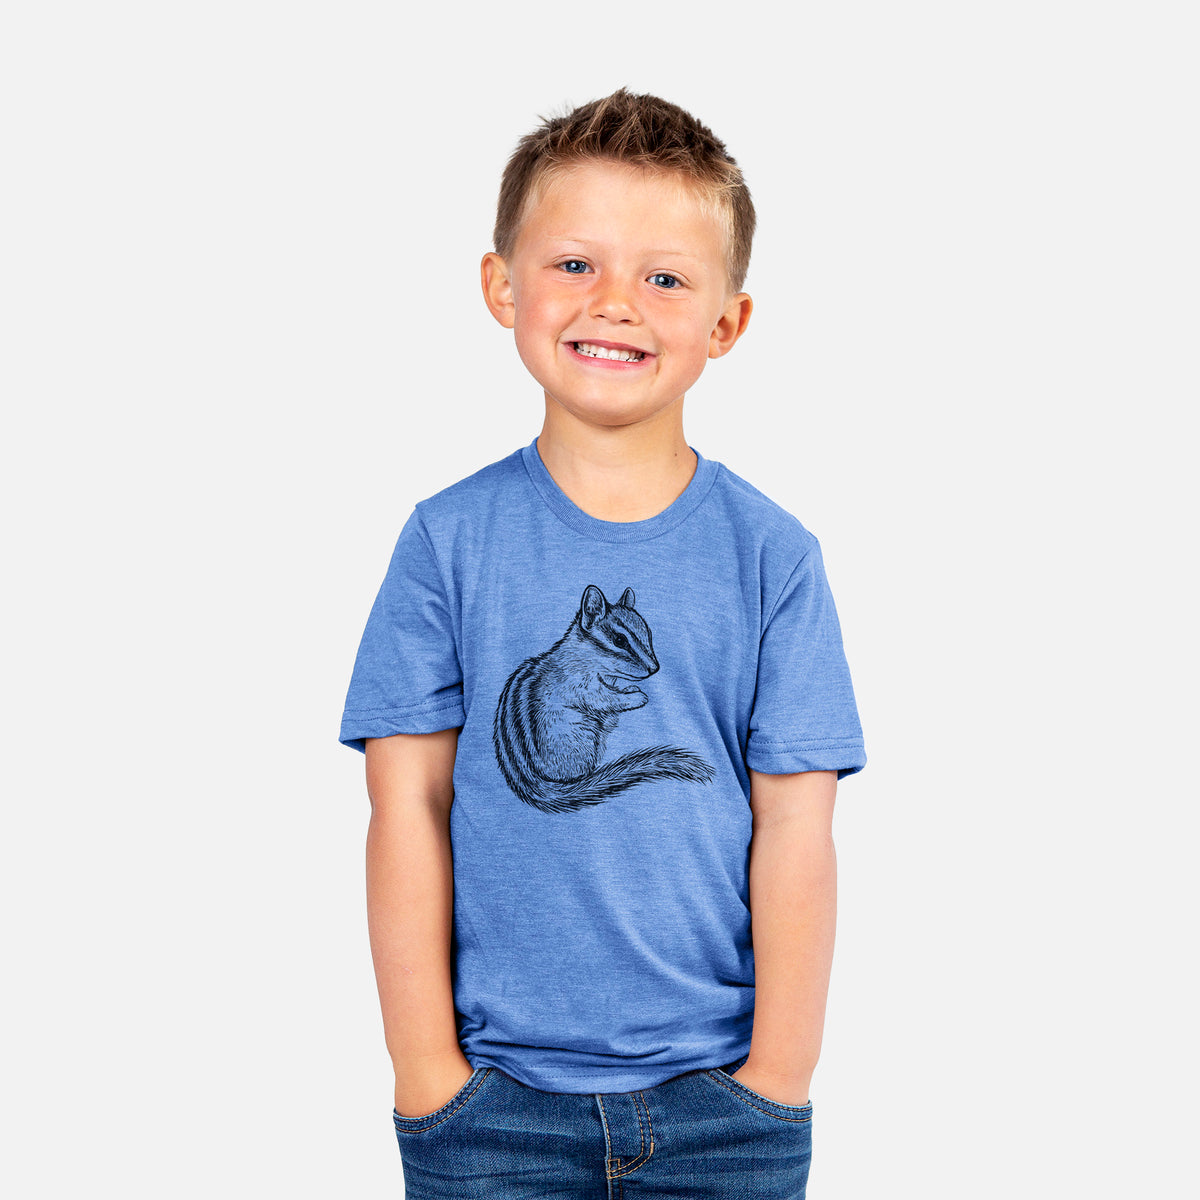 Chipmunk - Neotamias minimus - Kids Shirt